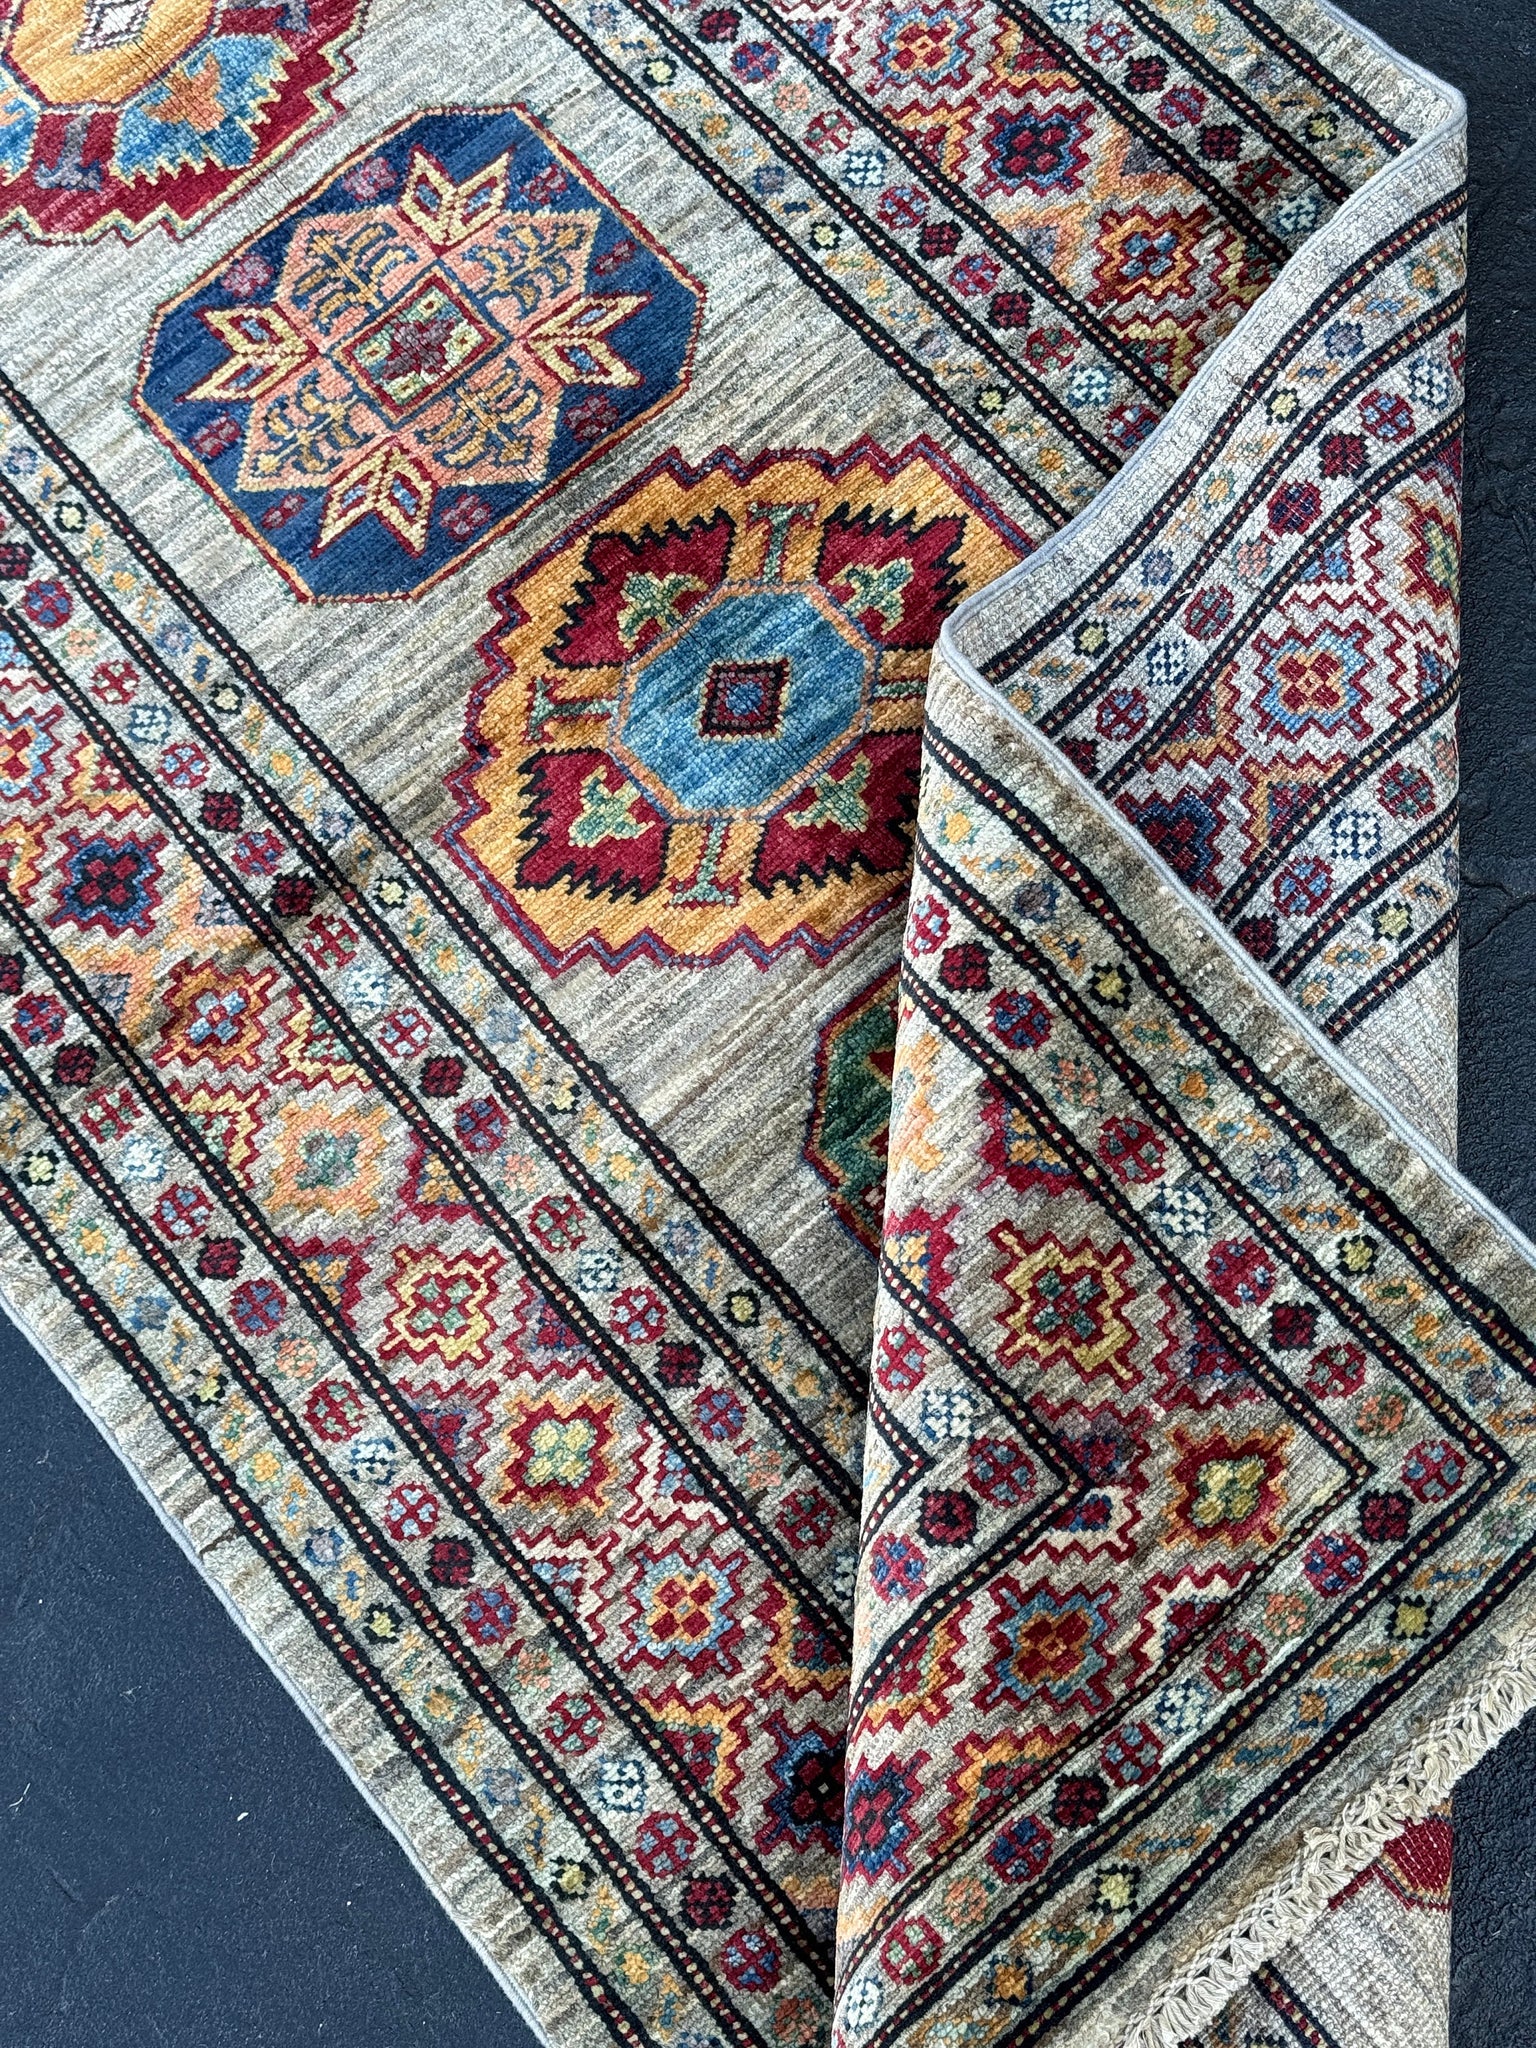 3x9 (90x274) Handmade Afghan Runner Rug | Beige Sand Crimson Red Teal Midnight Sky Blue Burnt Orange Gold Grey | Wool Hand Knotted Medallion